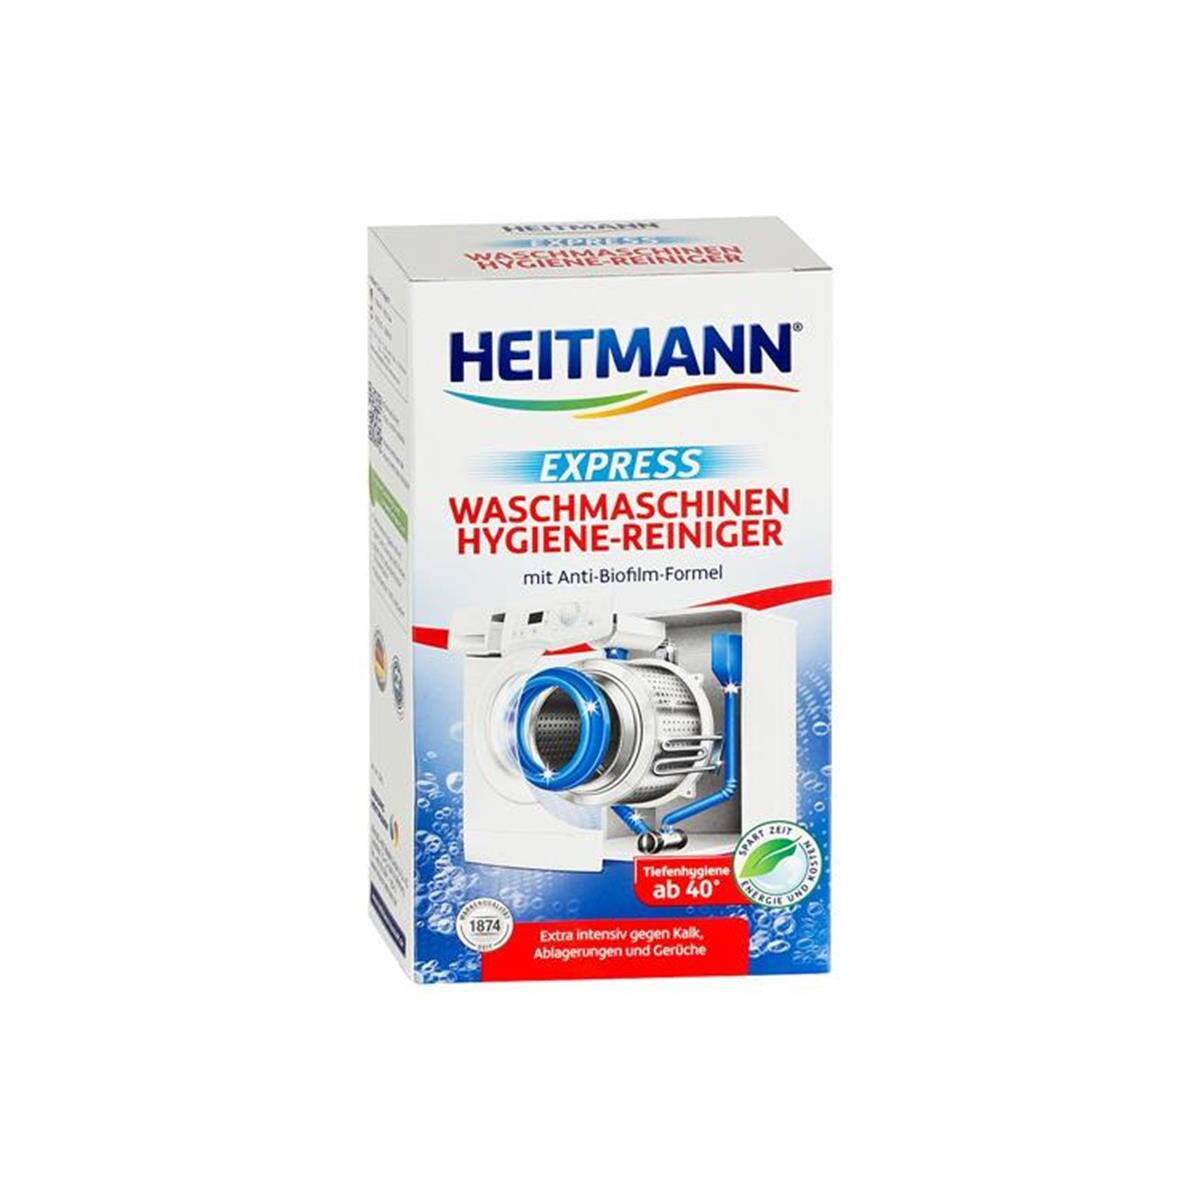 Heitmann Express Waschmaschinen Hygienereiniger 250g